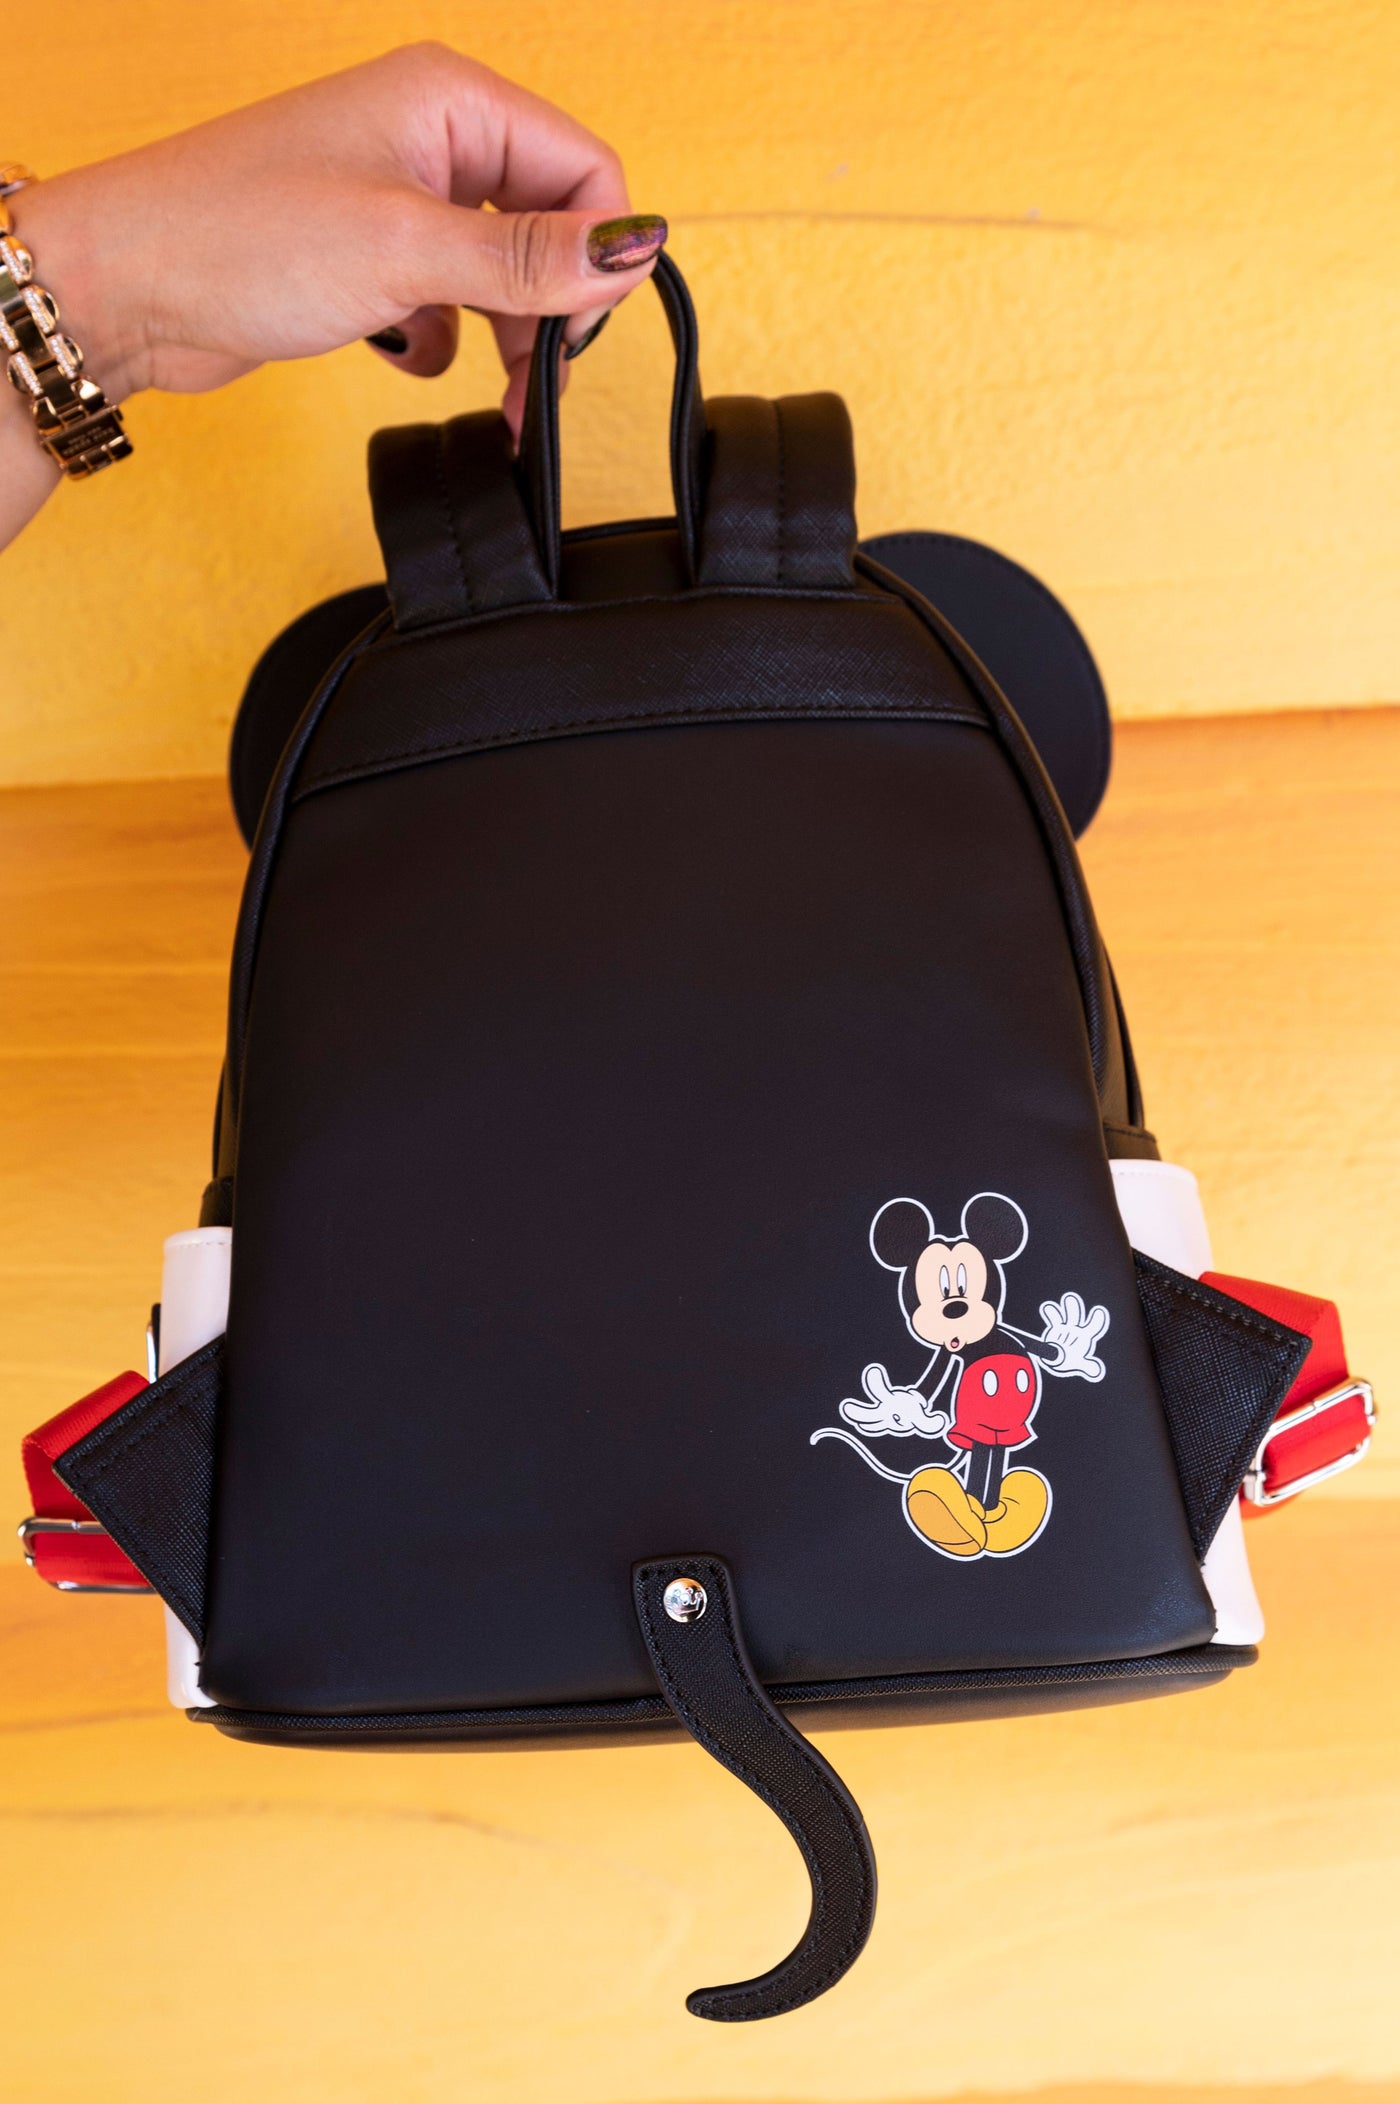 Loungefly Disney Pirate Mickey Mini Backpack - 707 Street